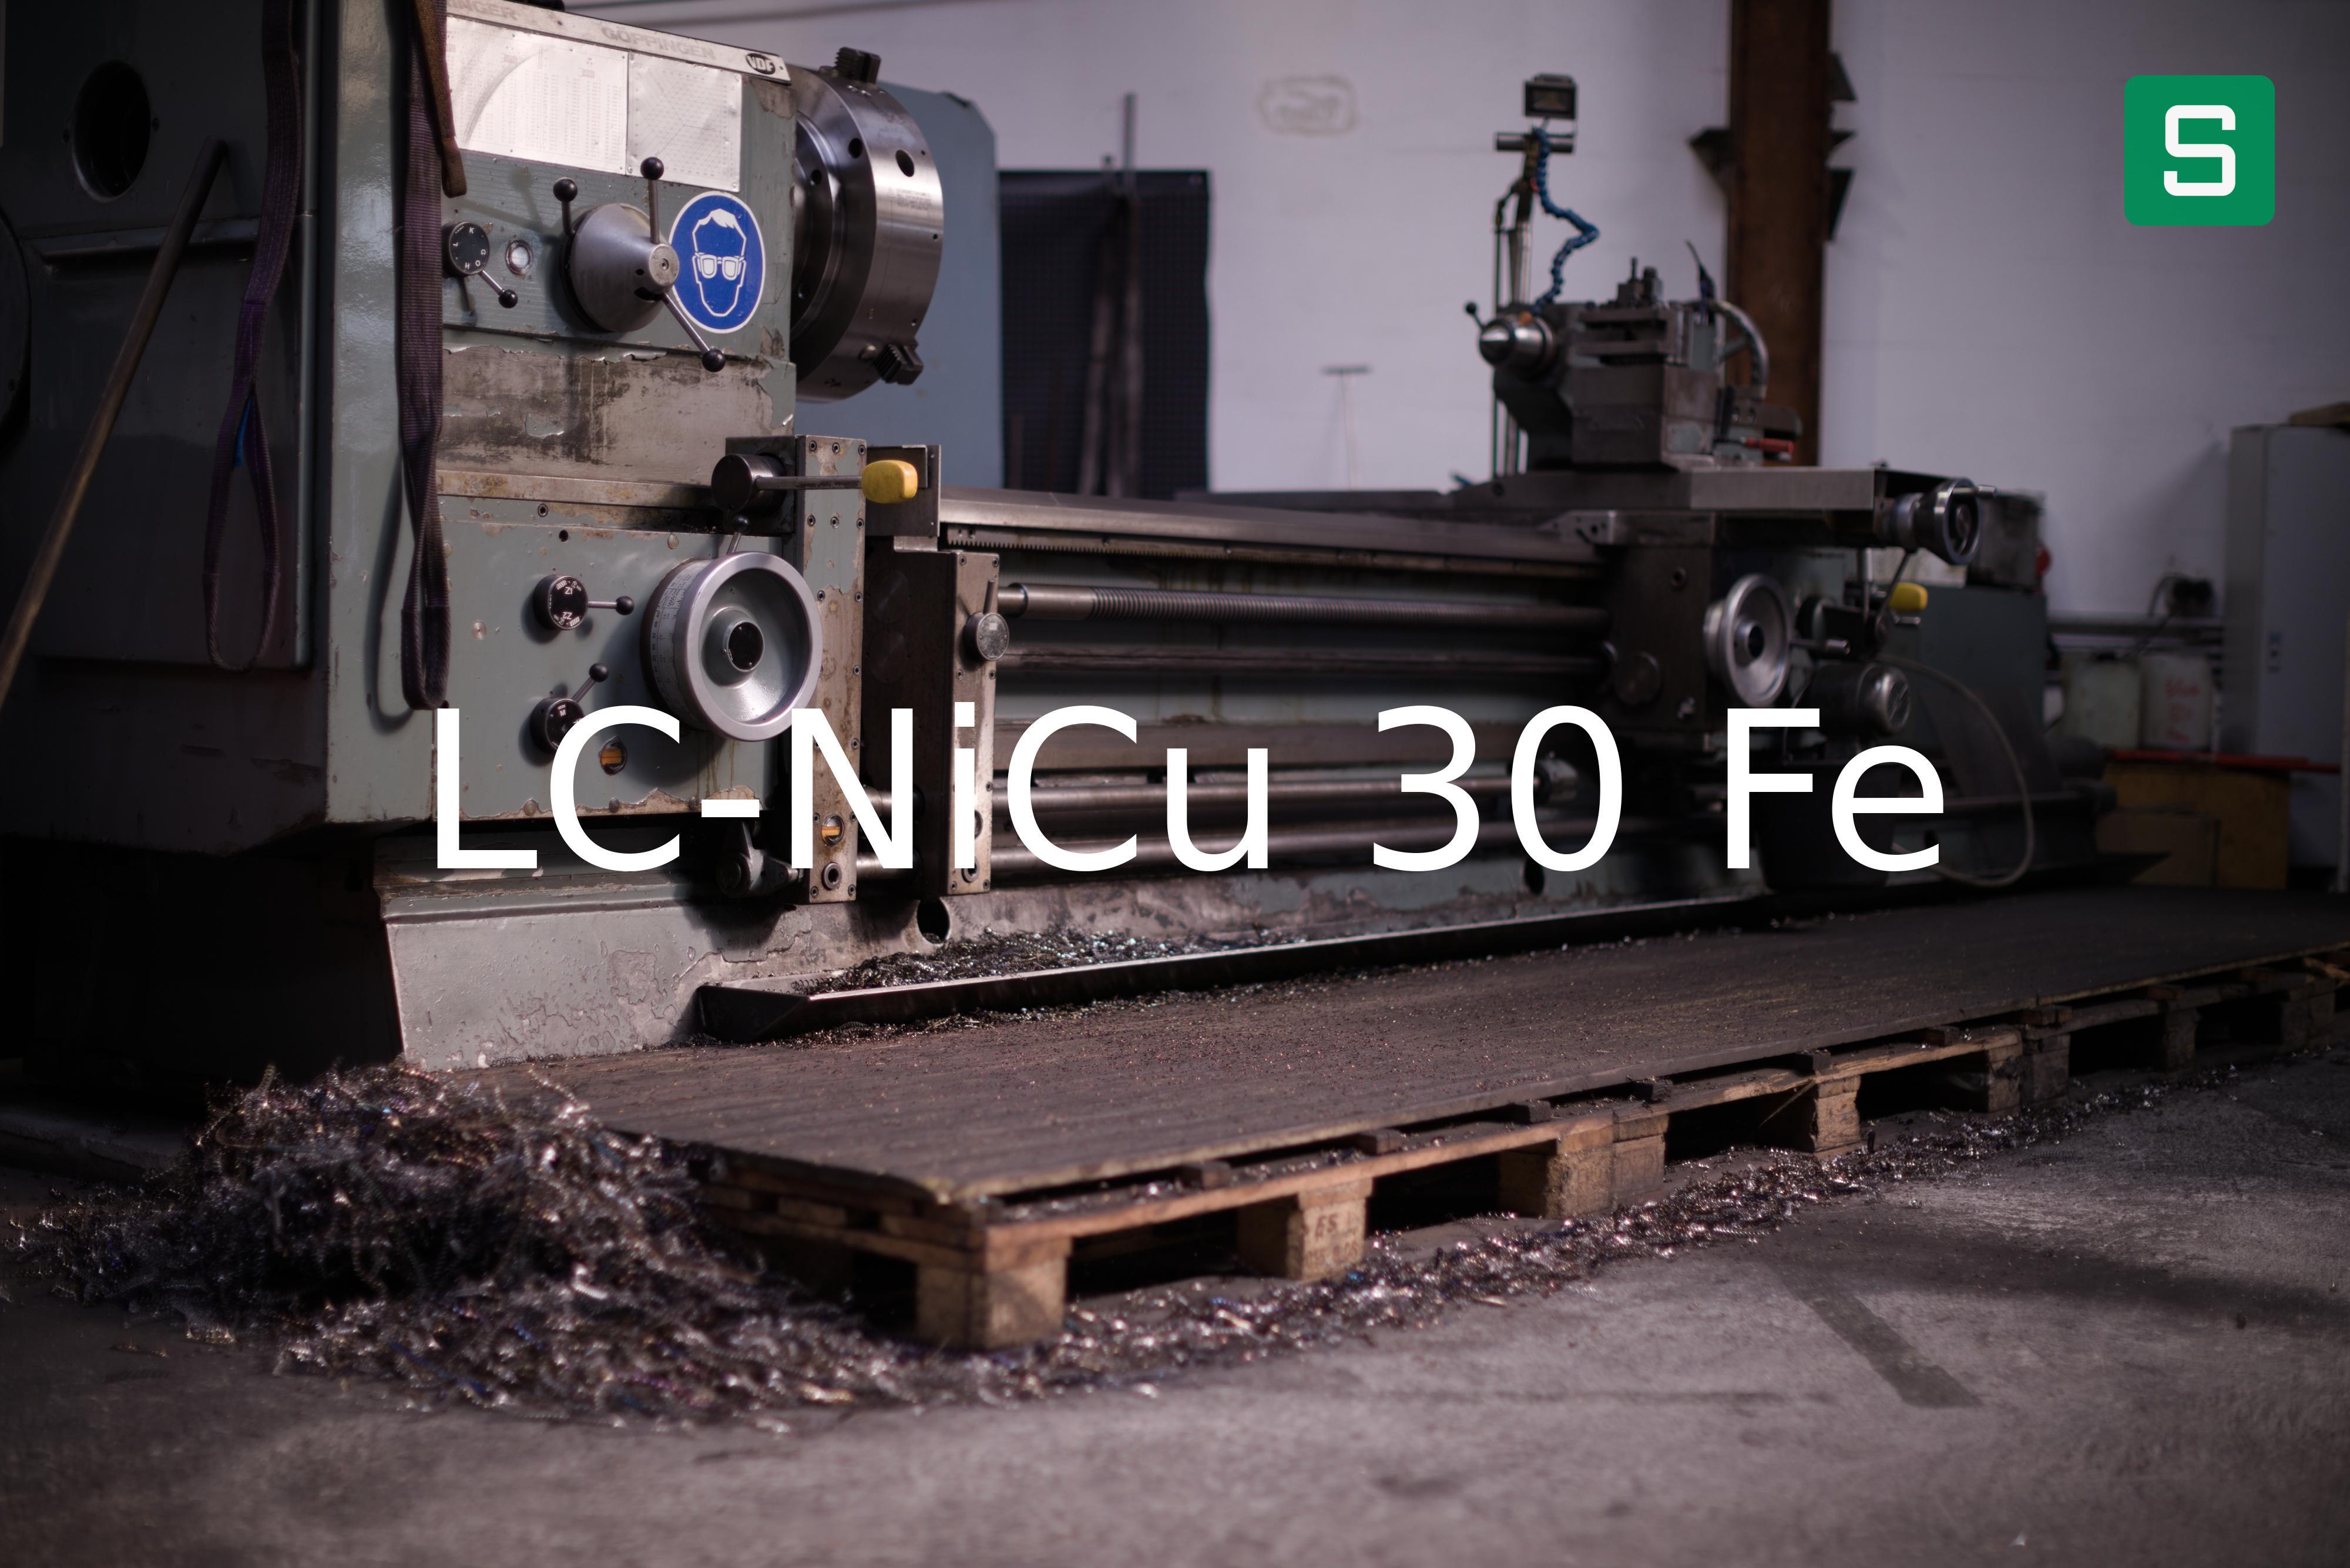 Steel Material: LC-NiCu 30 Fe